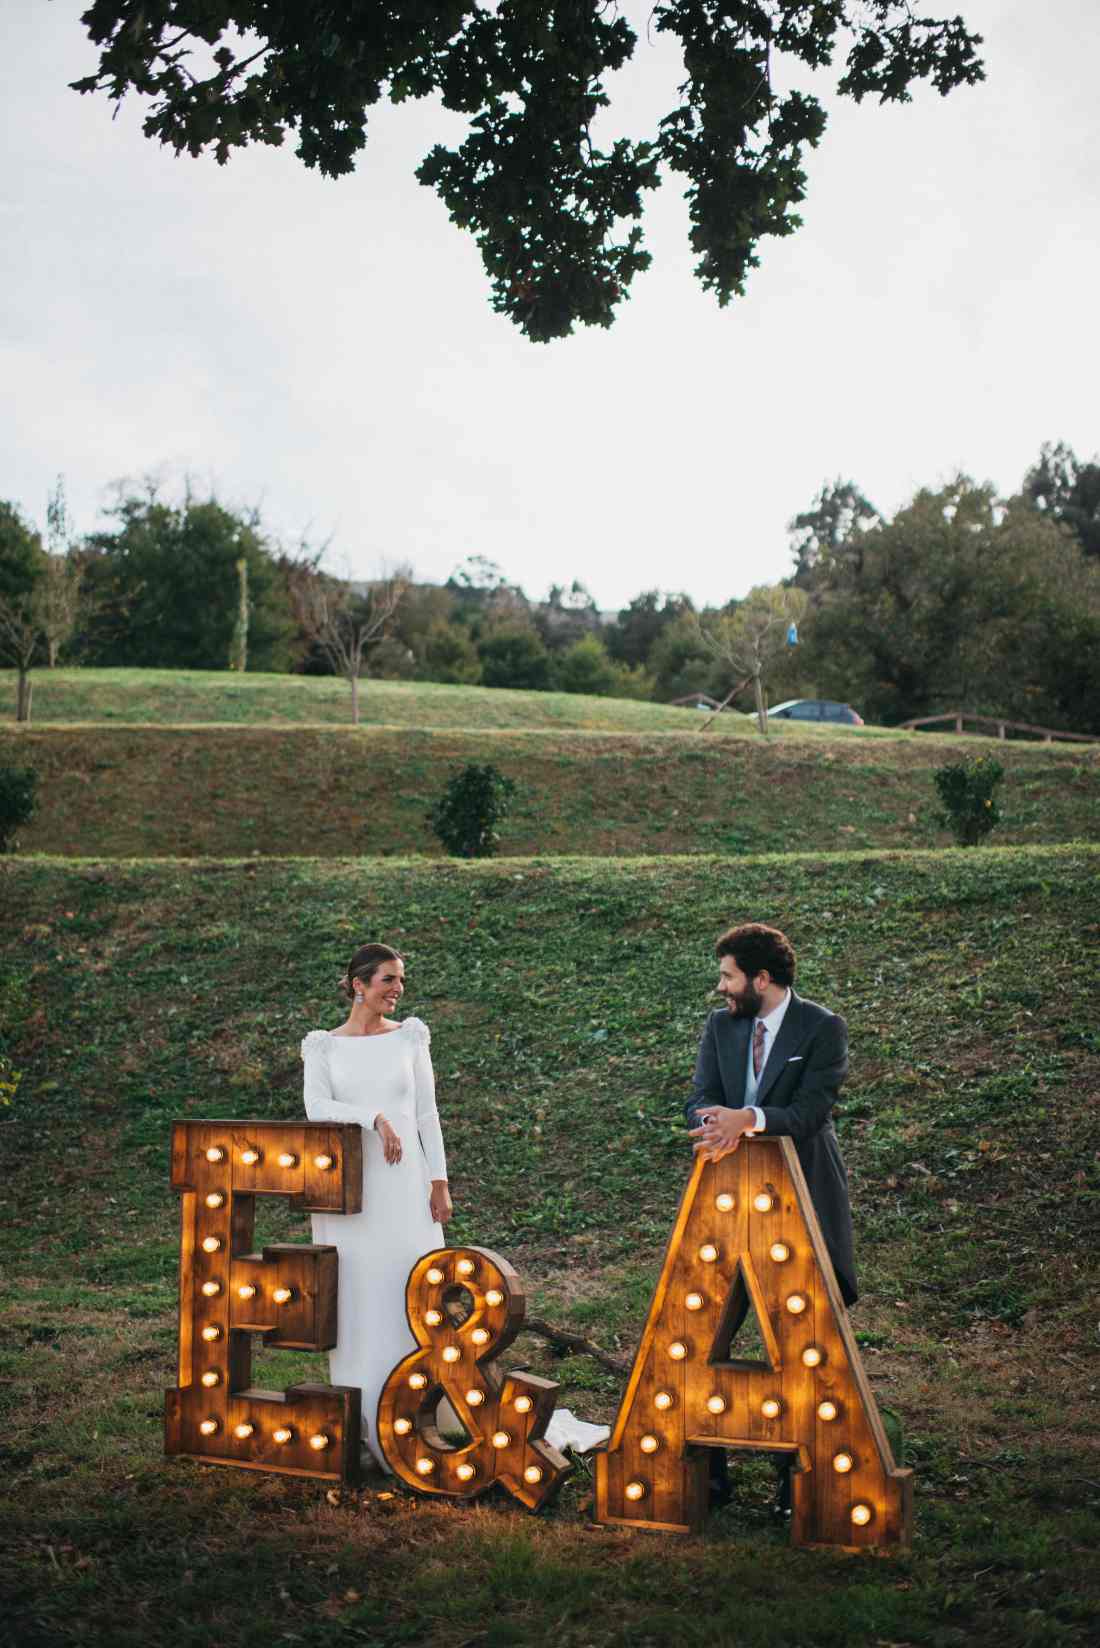 letras decorativas para bodas